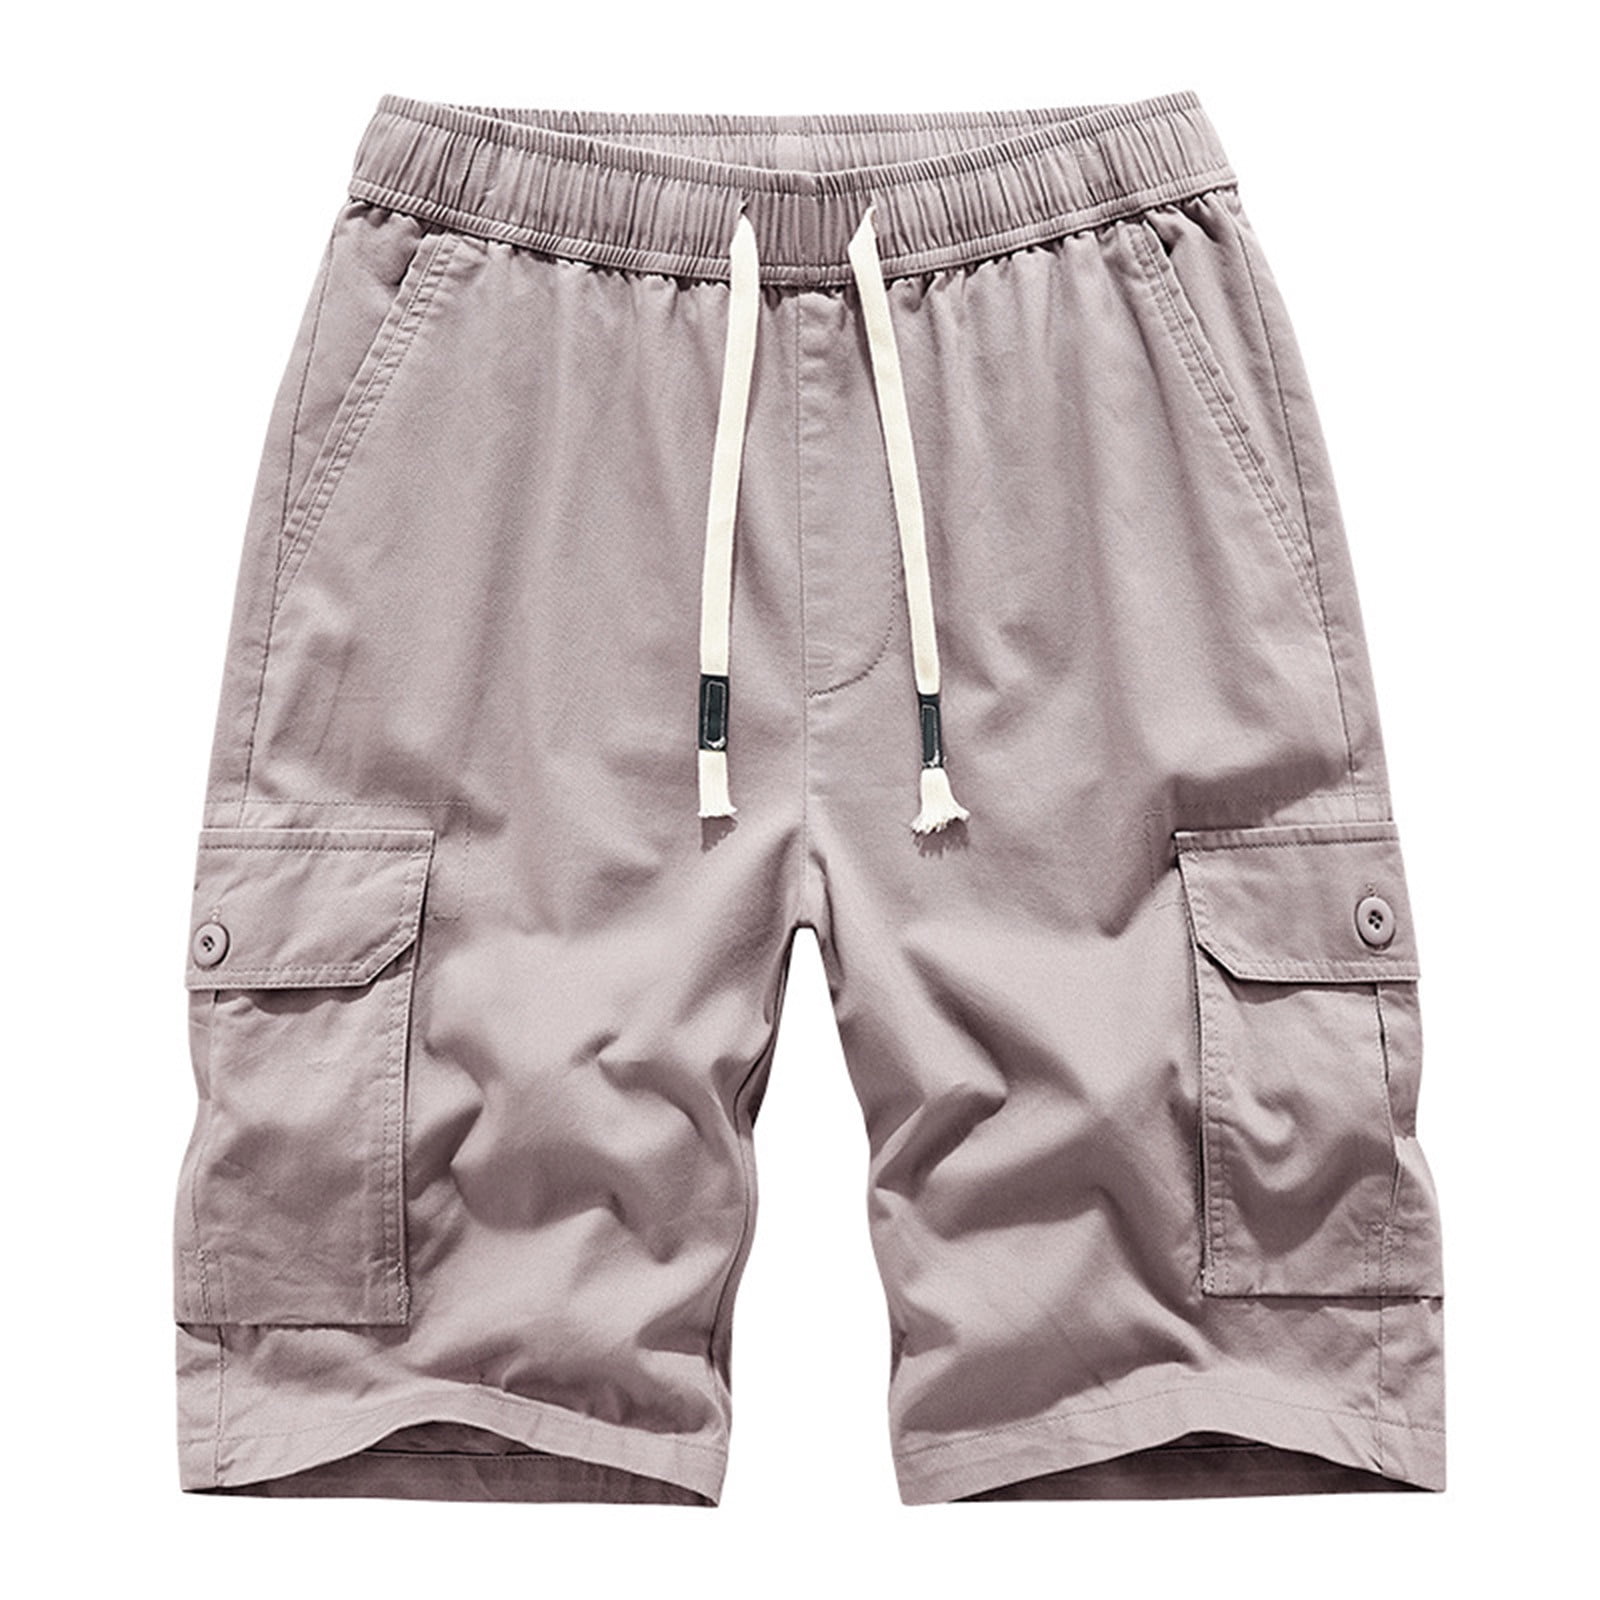 Reduce Price RYRJJ Men's Cargo Shorts Elastic Waist Drawstring Cotton ...